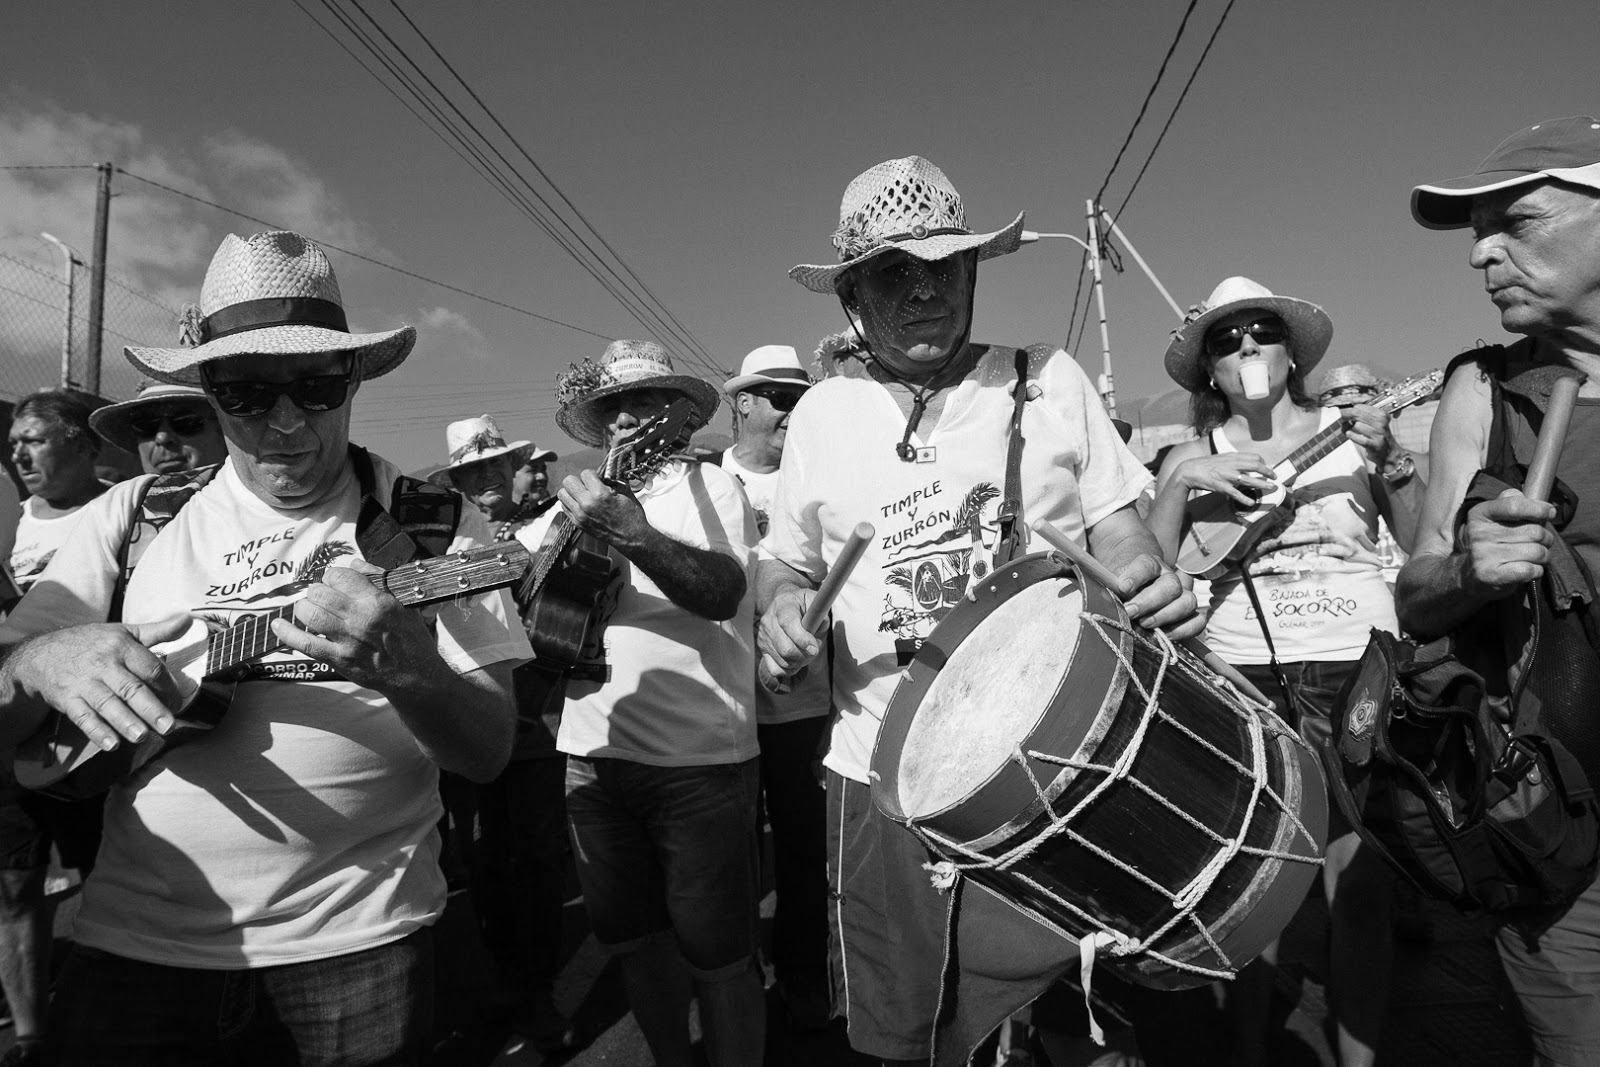 Romeria, Guimar - Socorro; Procession with music, drums